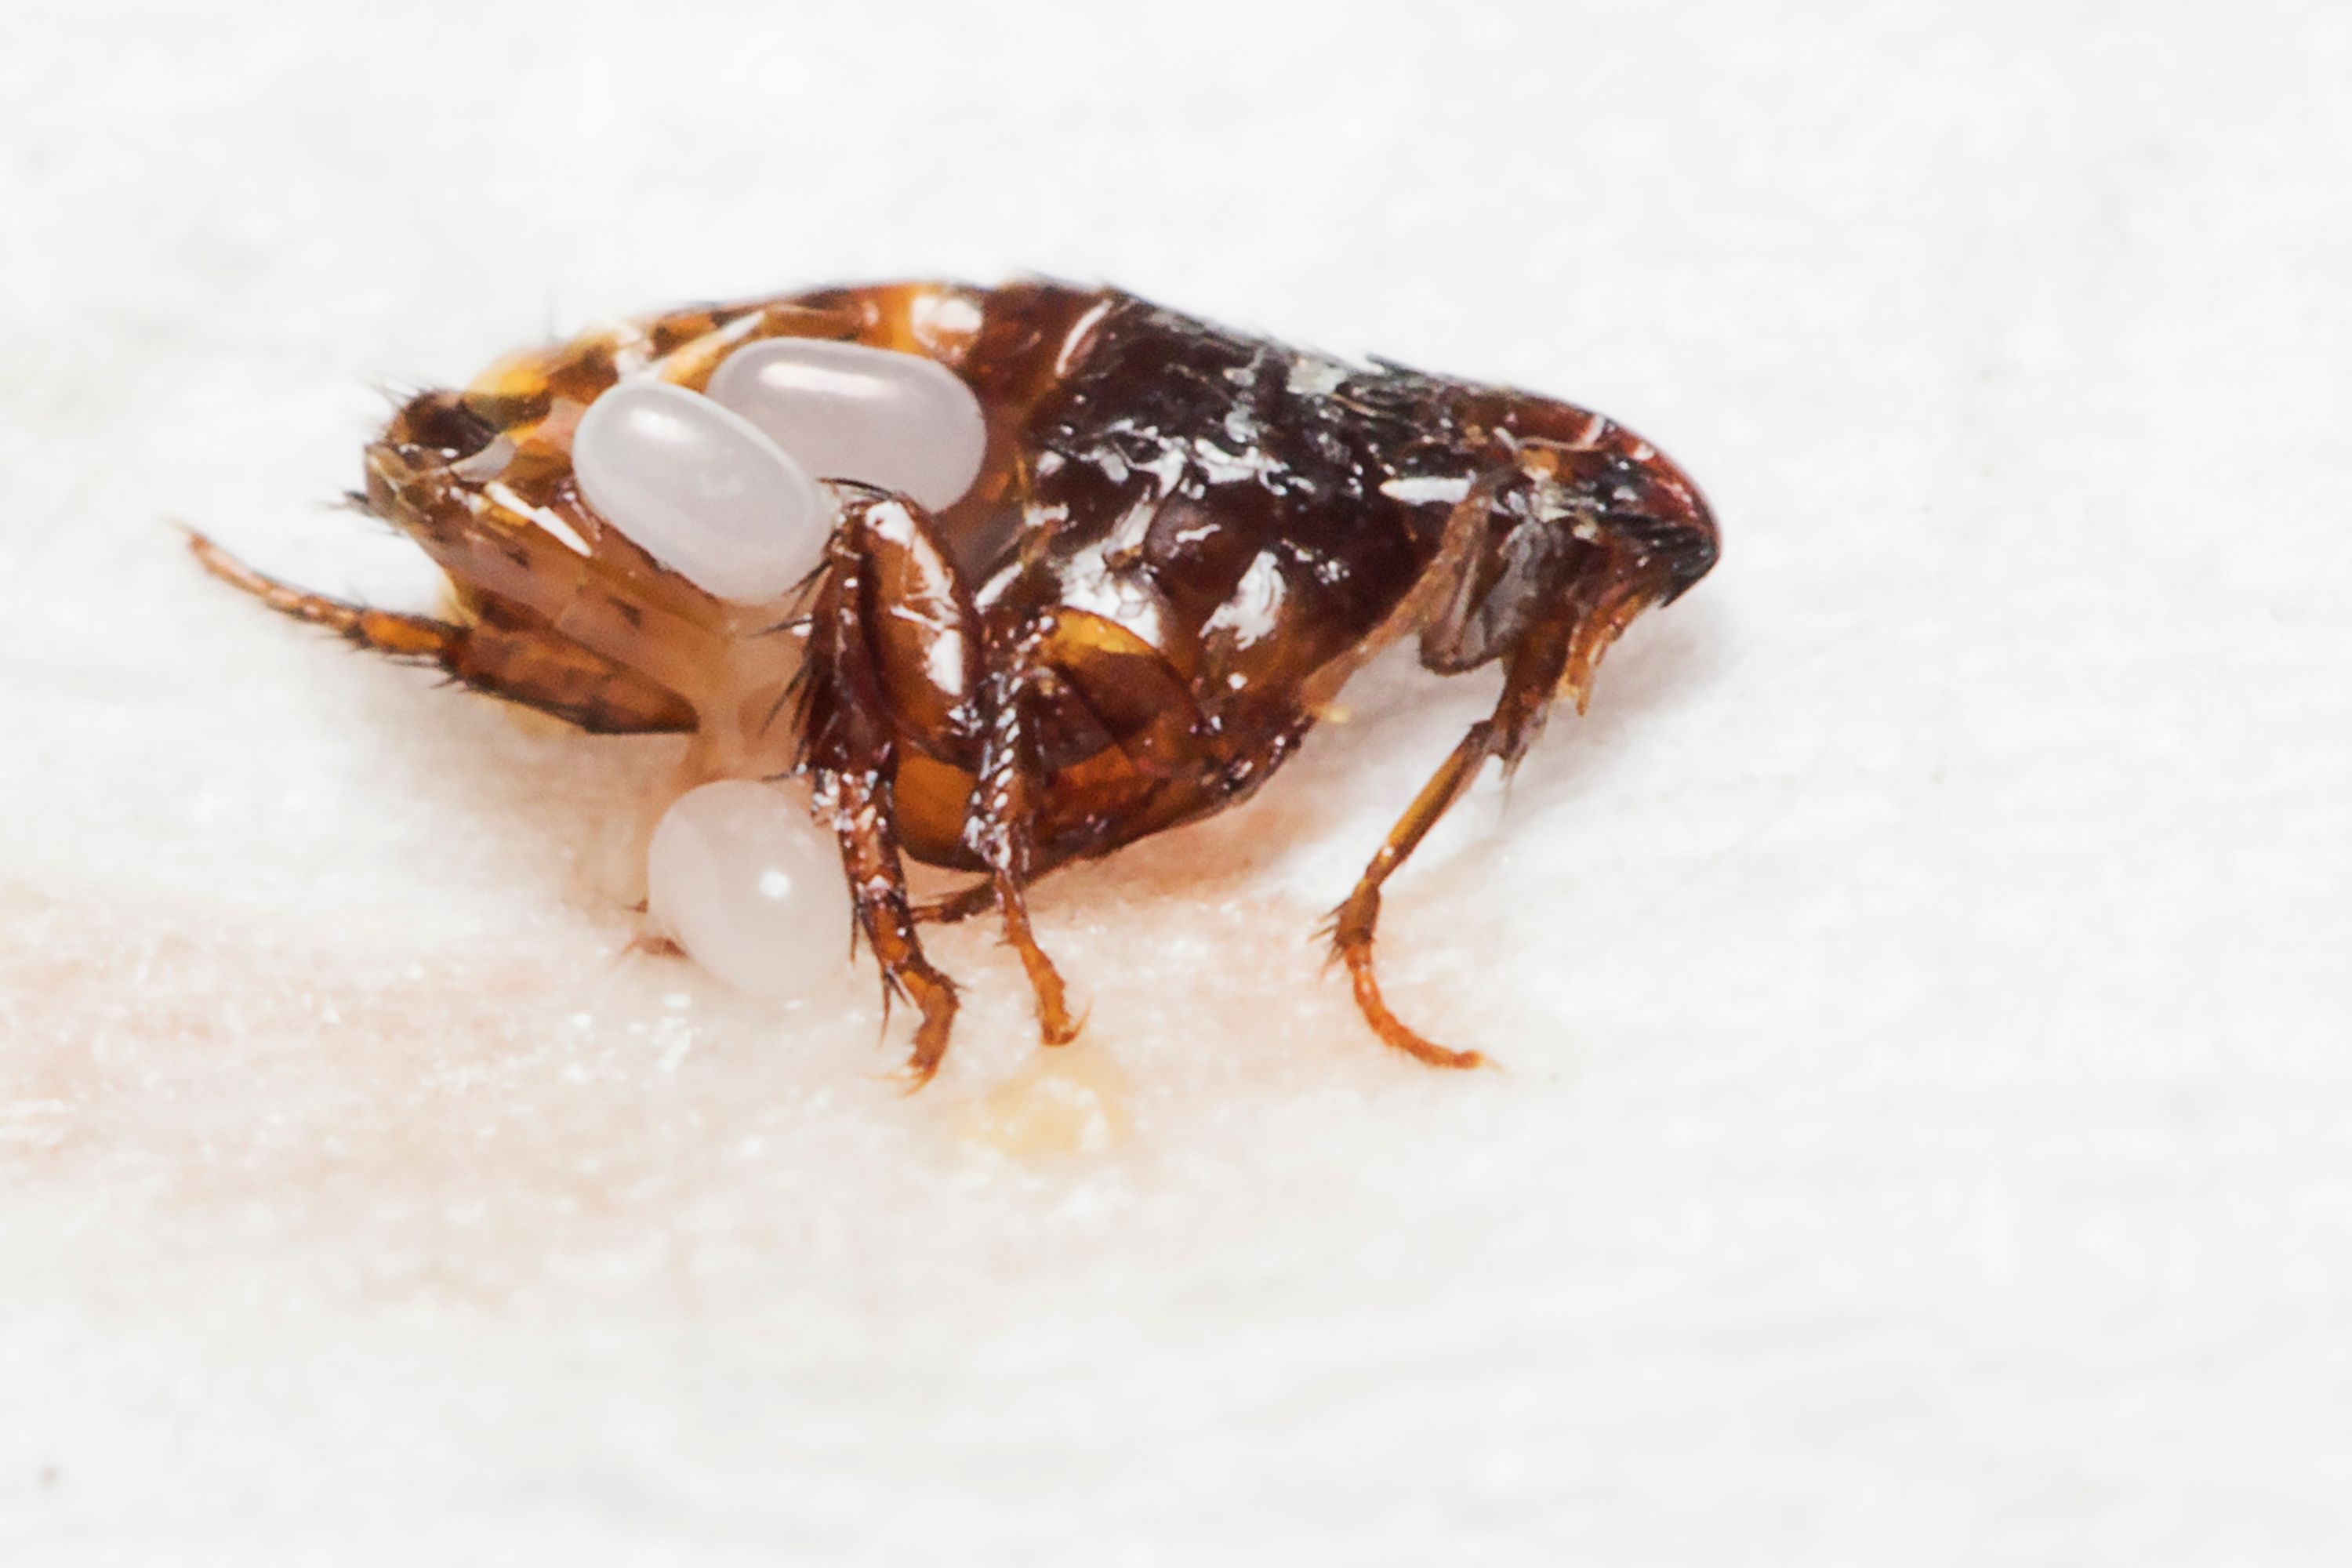 Do Bed Bugs Have Natural Predators